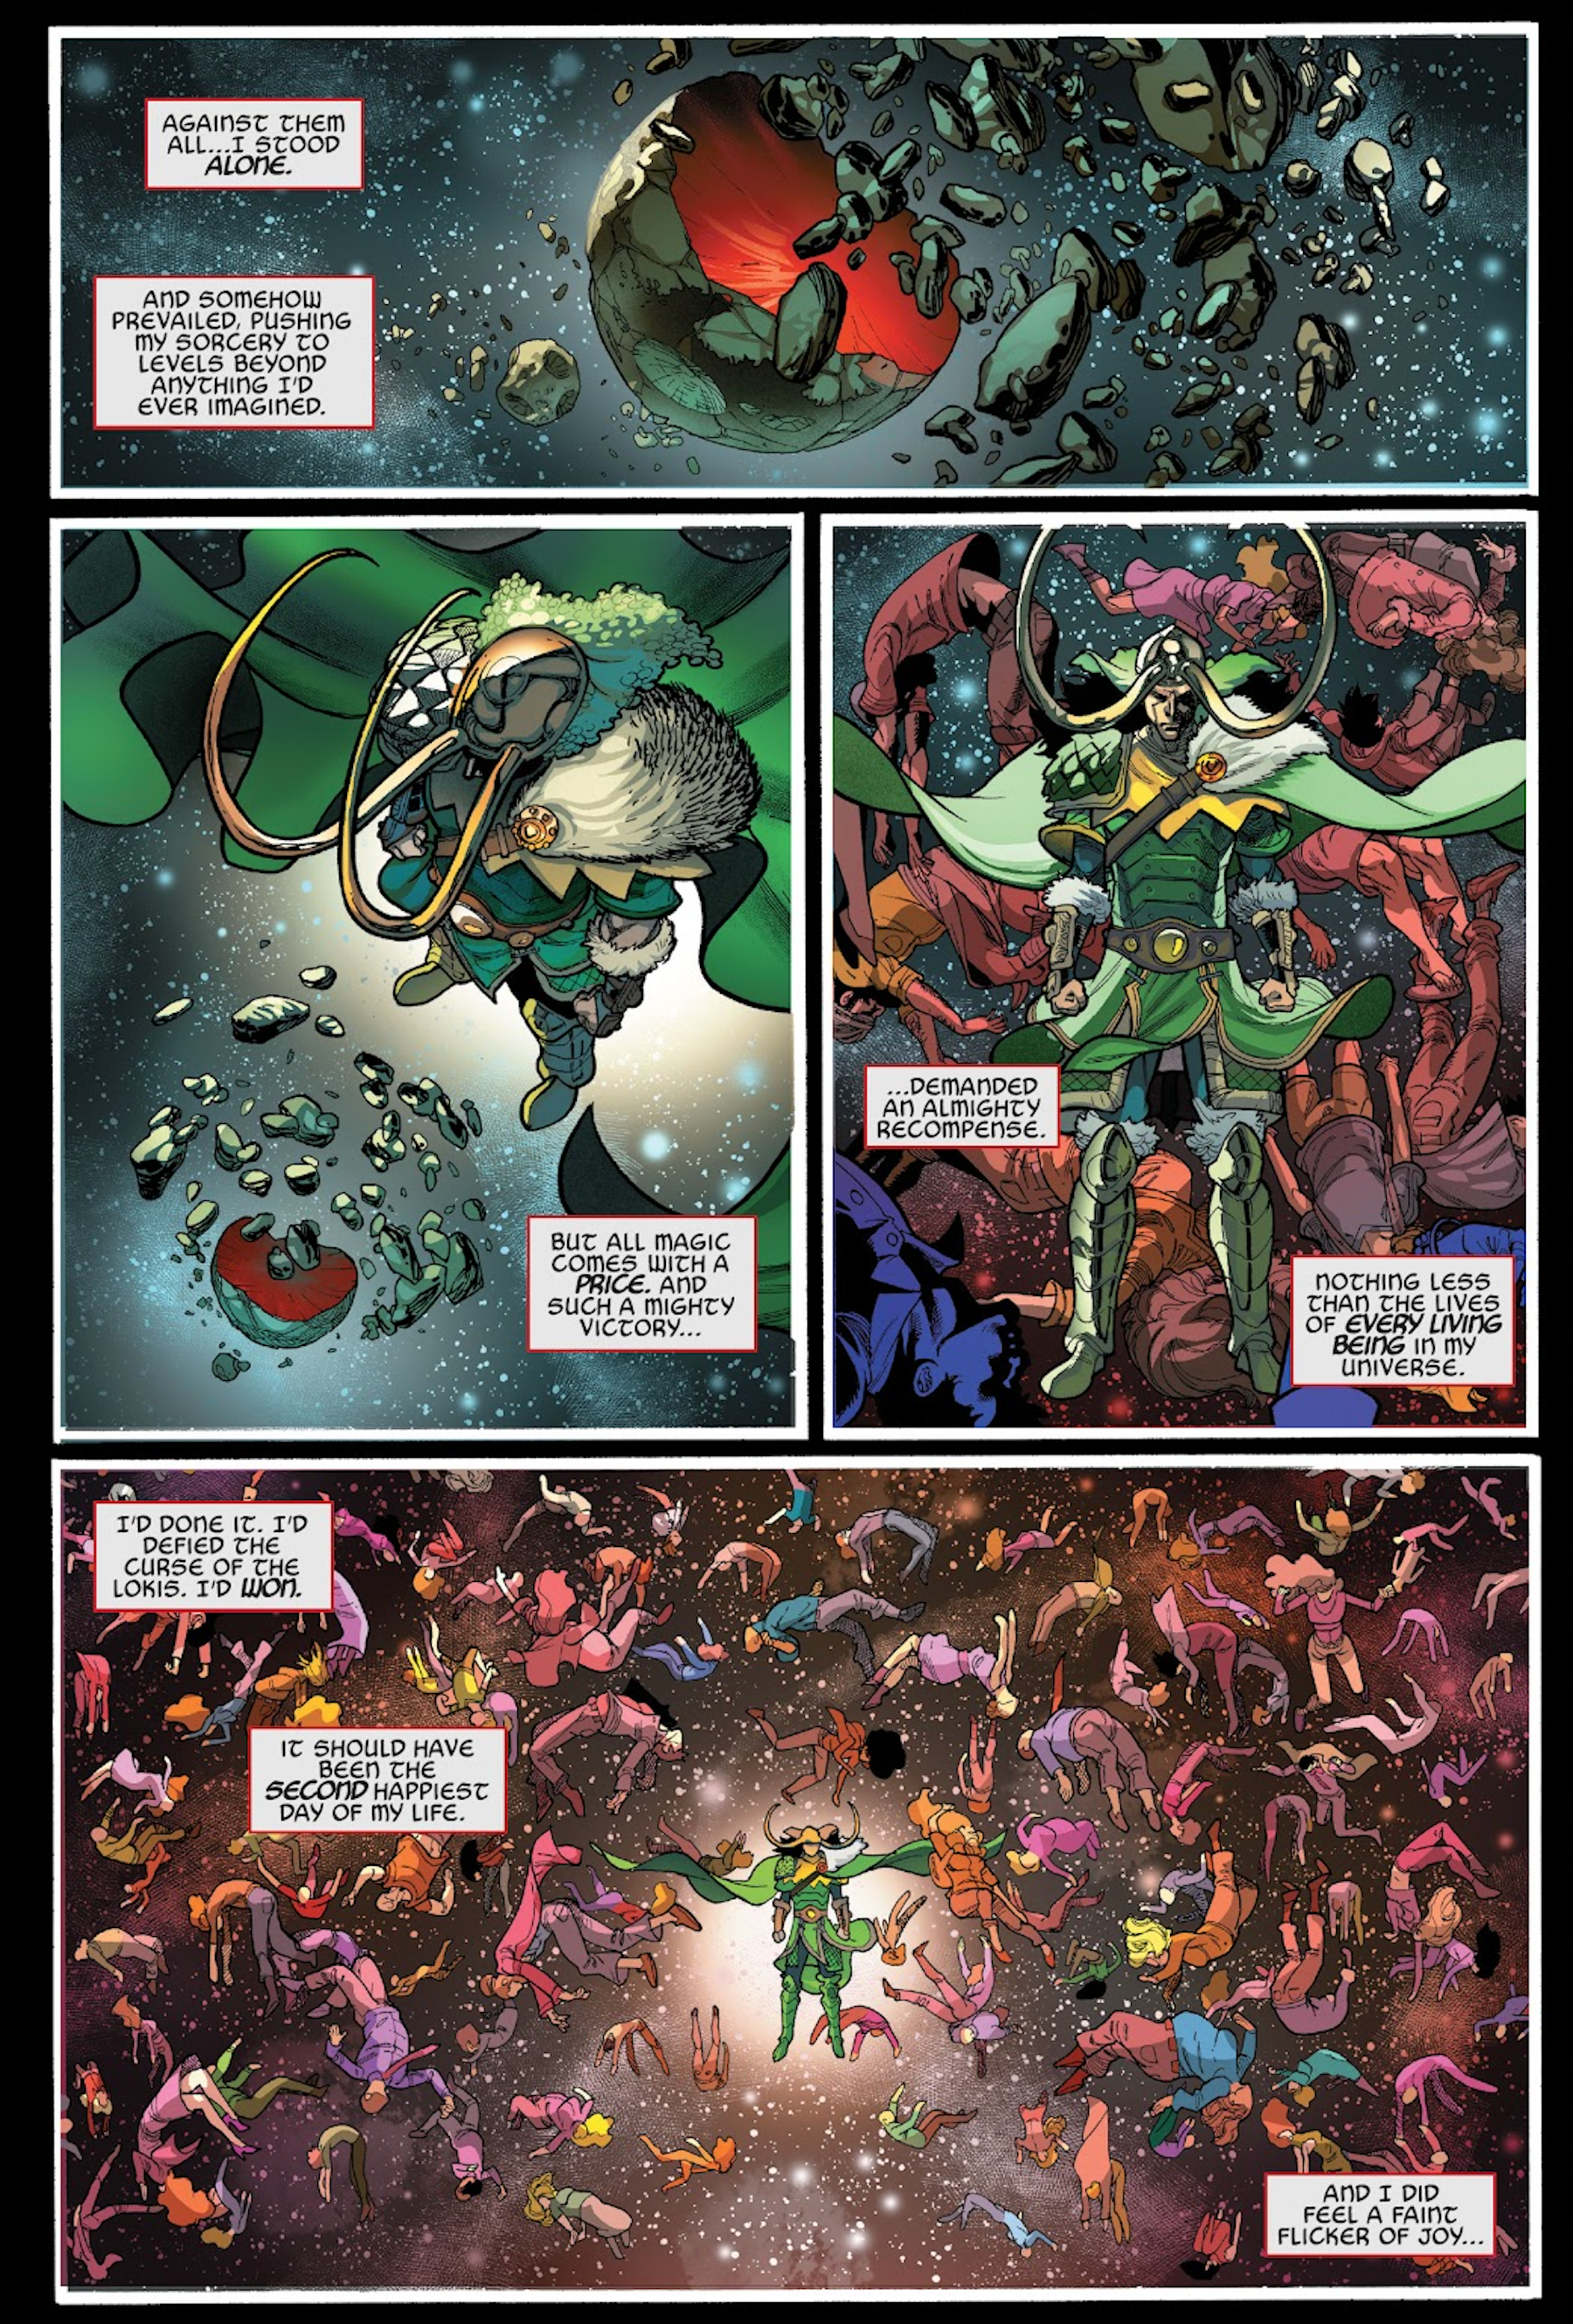 Loki as Avenger Prime destroys the universe